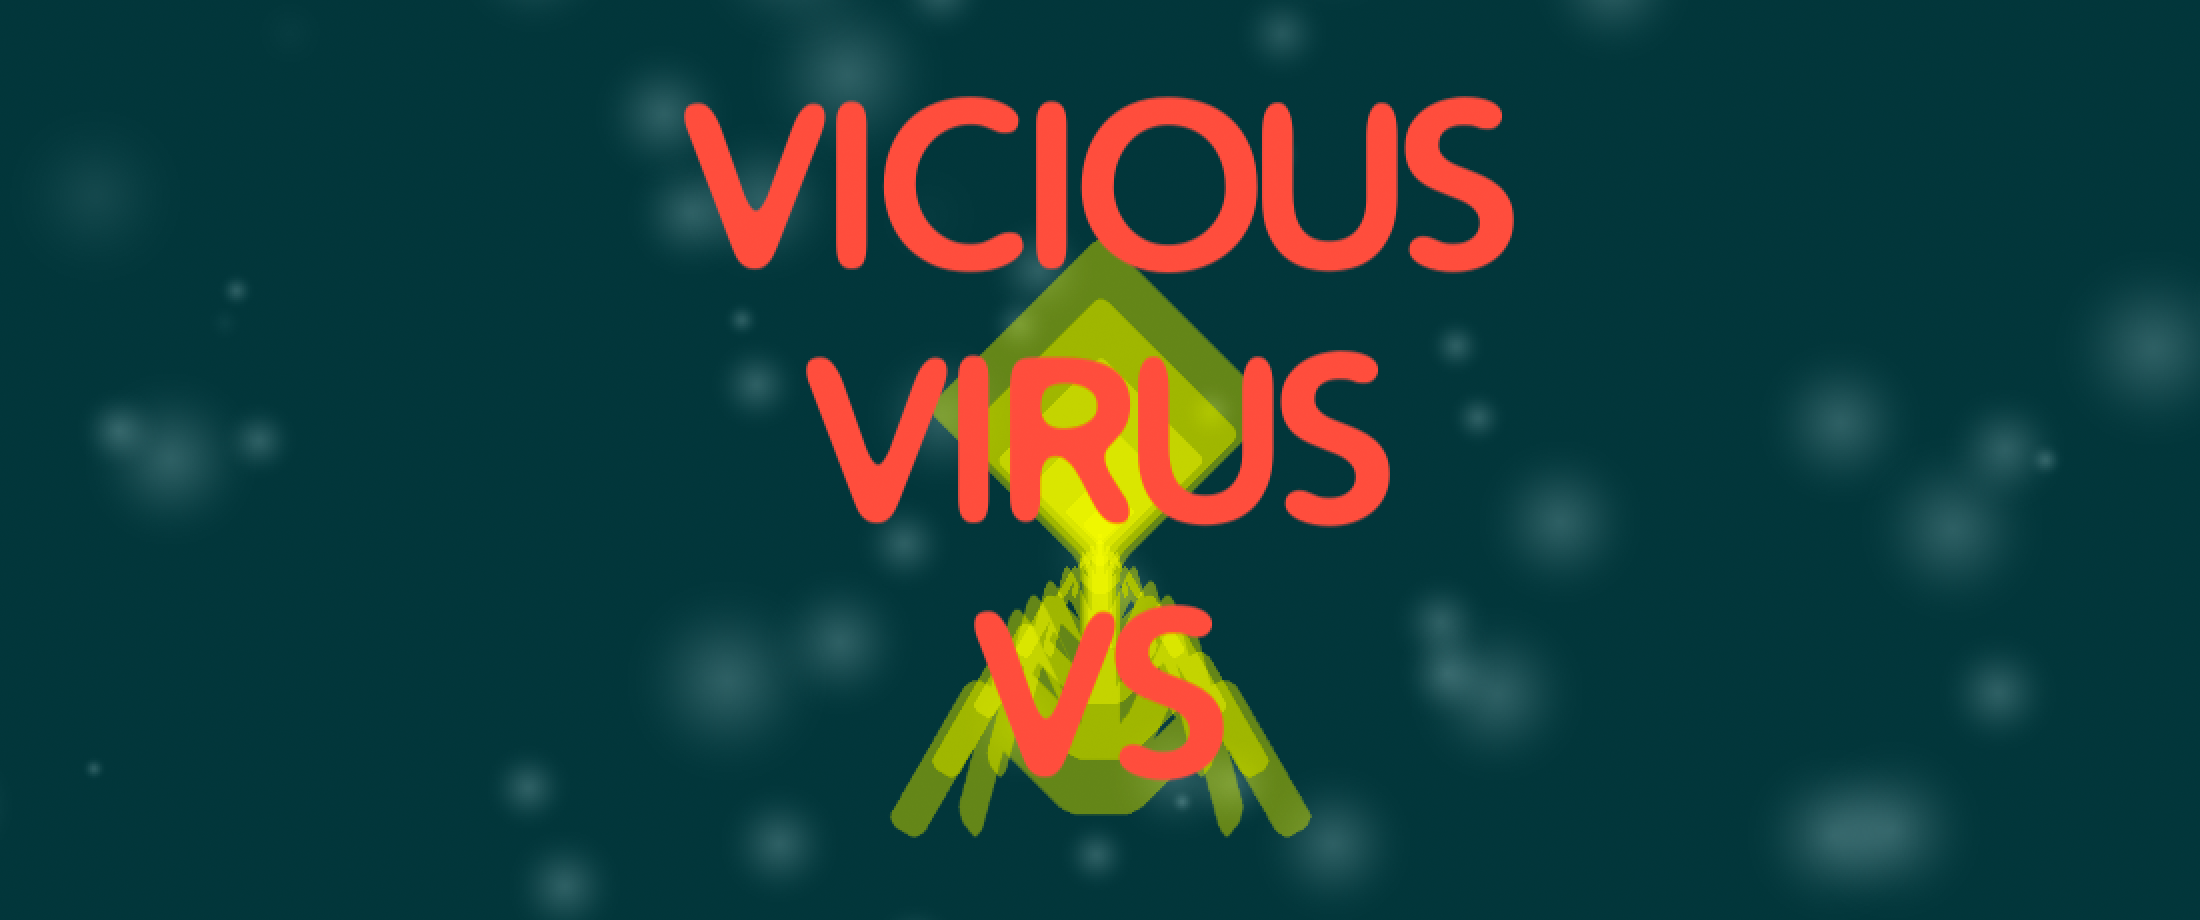 Vicious Virus Vs